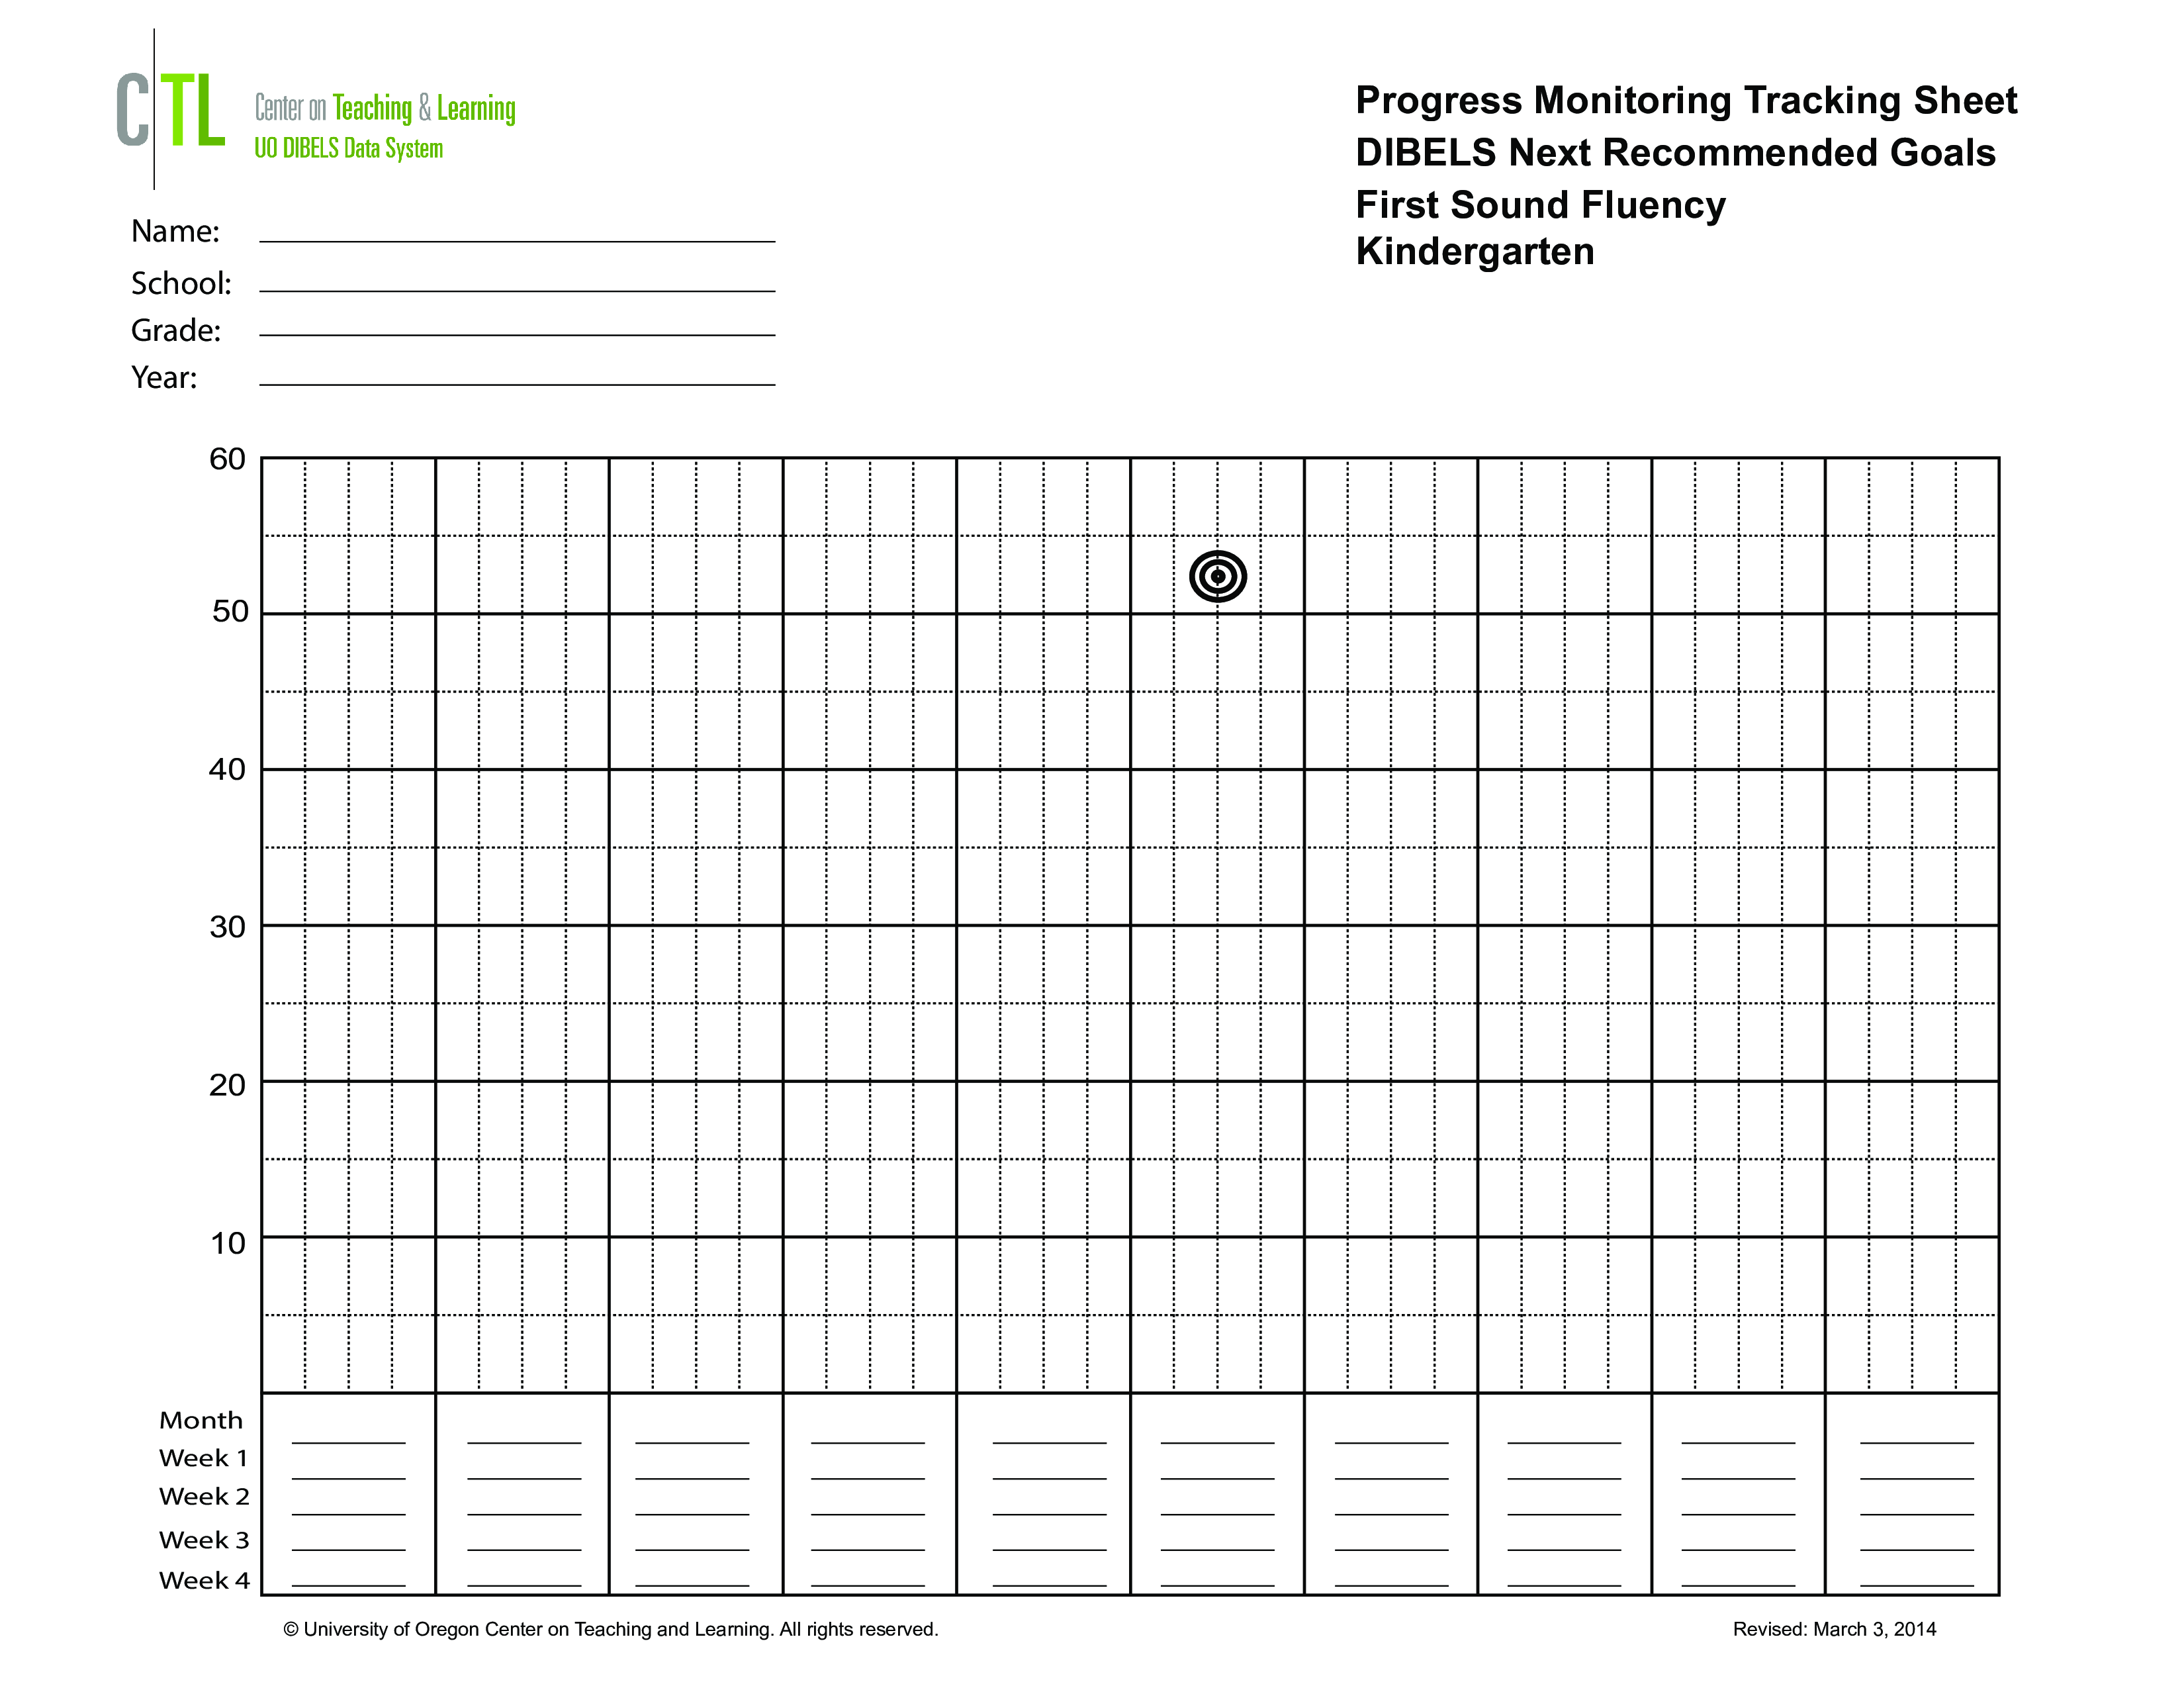 Progress Monitoring Tracking Sheet main image